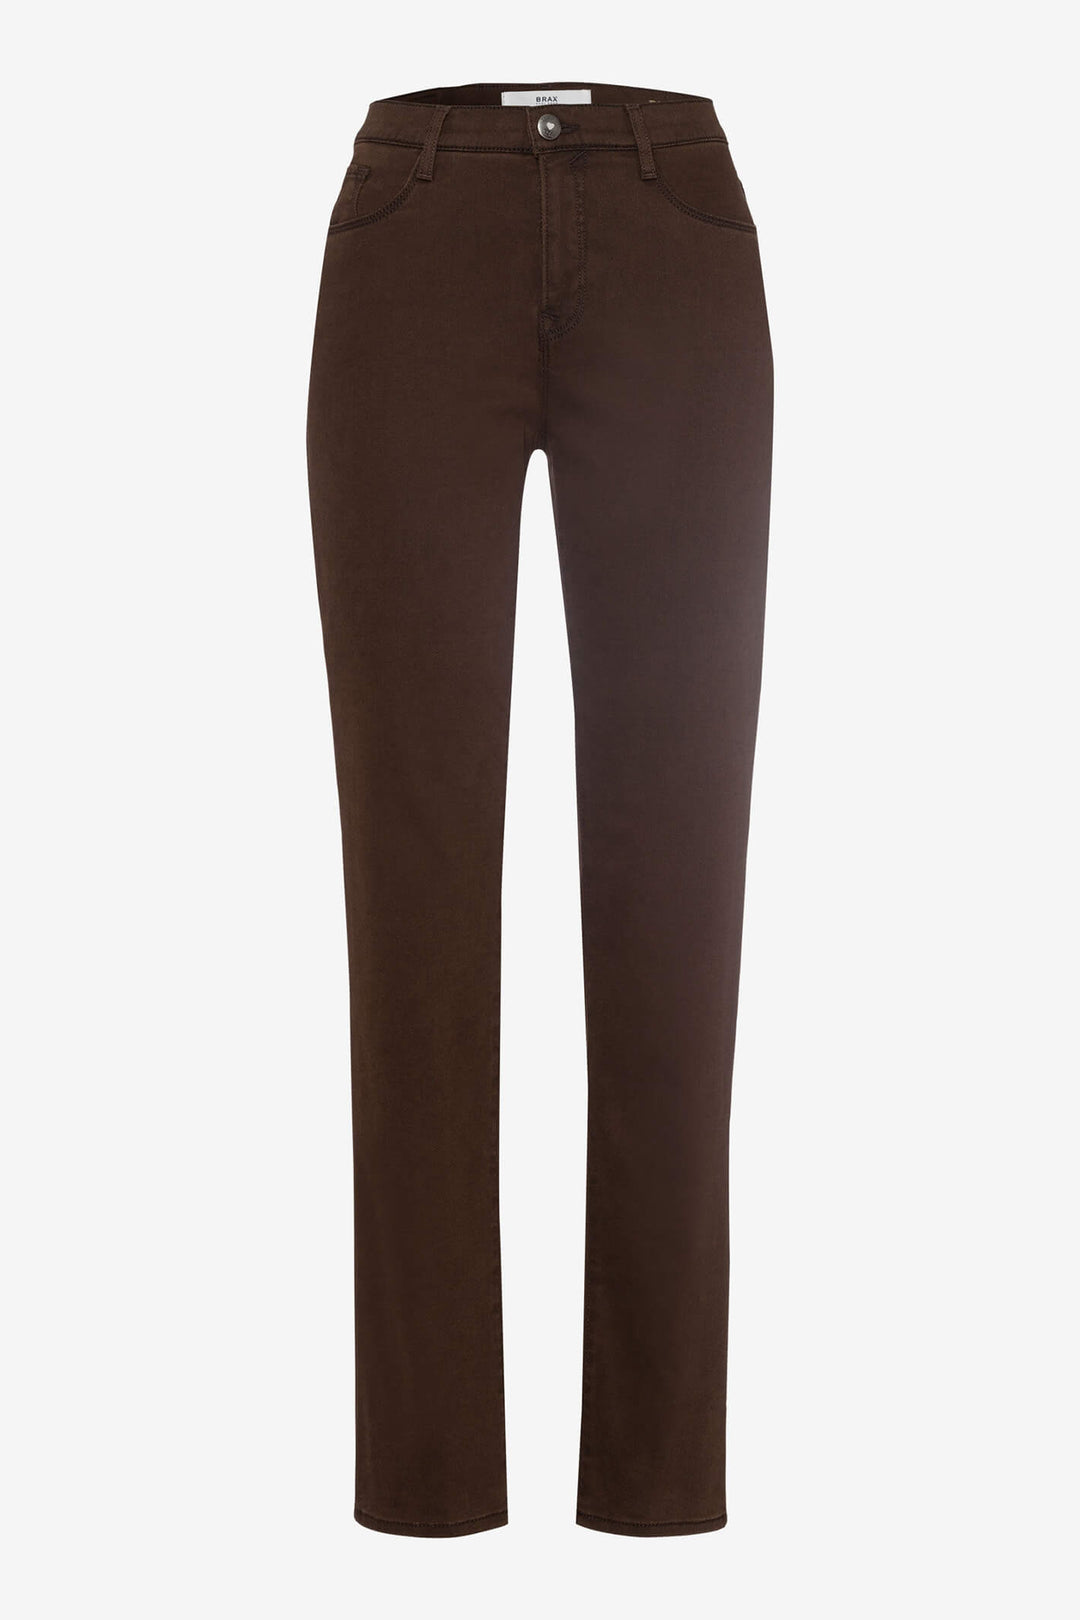 Brax Carola 75-4007/52 Brown Straight Fit Jeans - Shirley Allum Boutique